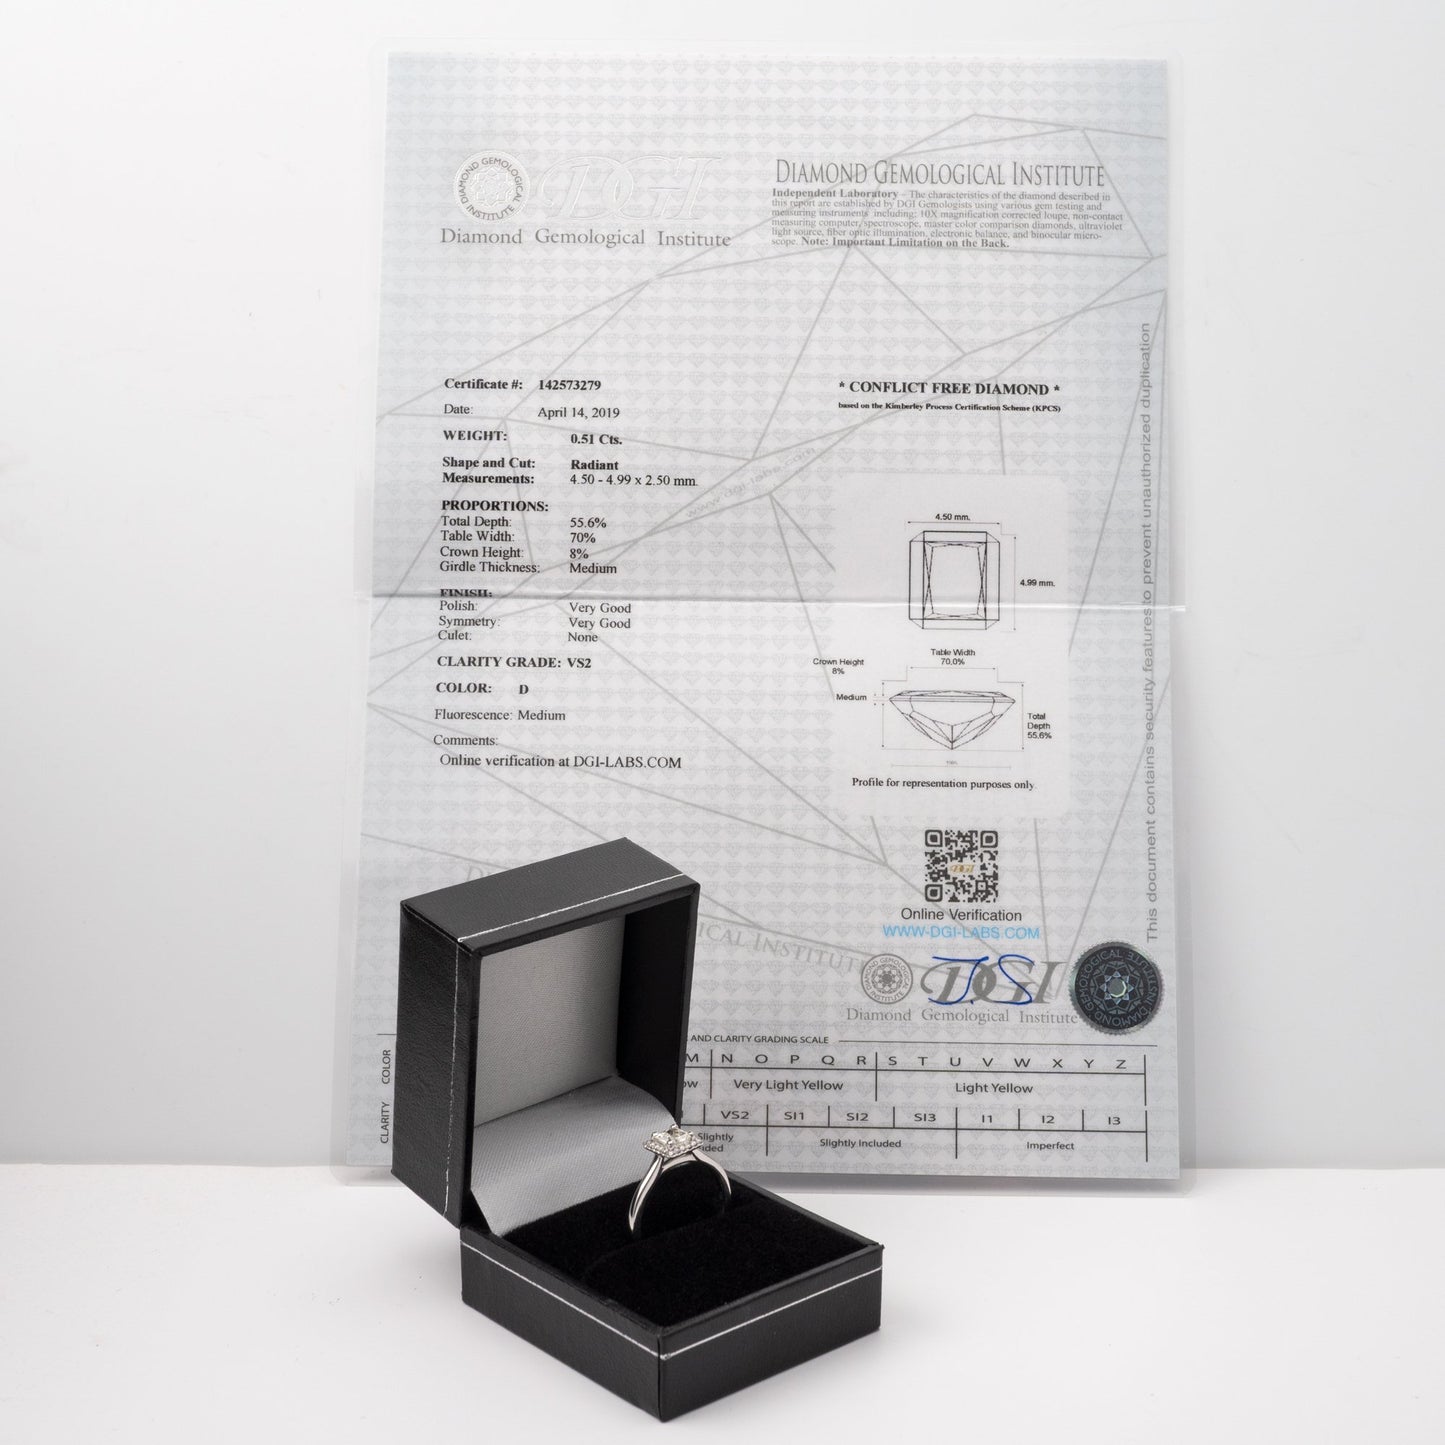 Certified Radiant Cut Diamond Halo Ring 18K White Gold Hallmarked-Diamond Rings-Hunters Fine Jewellery